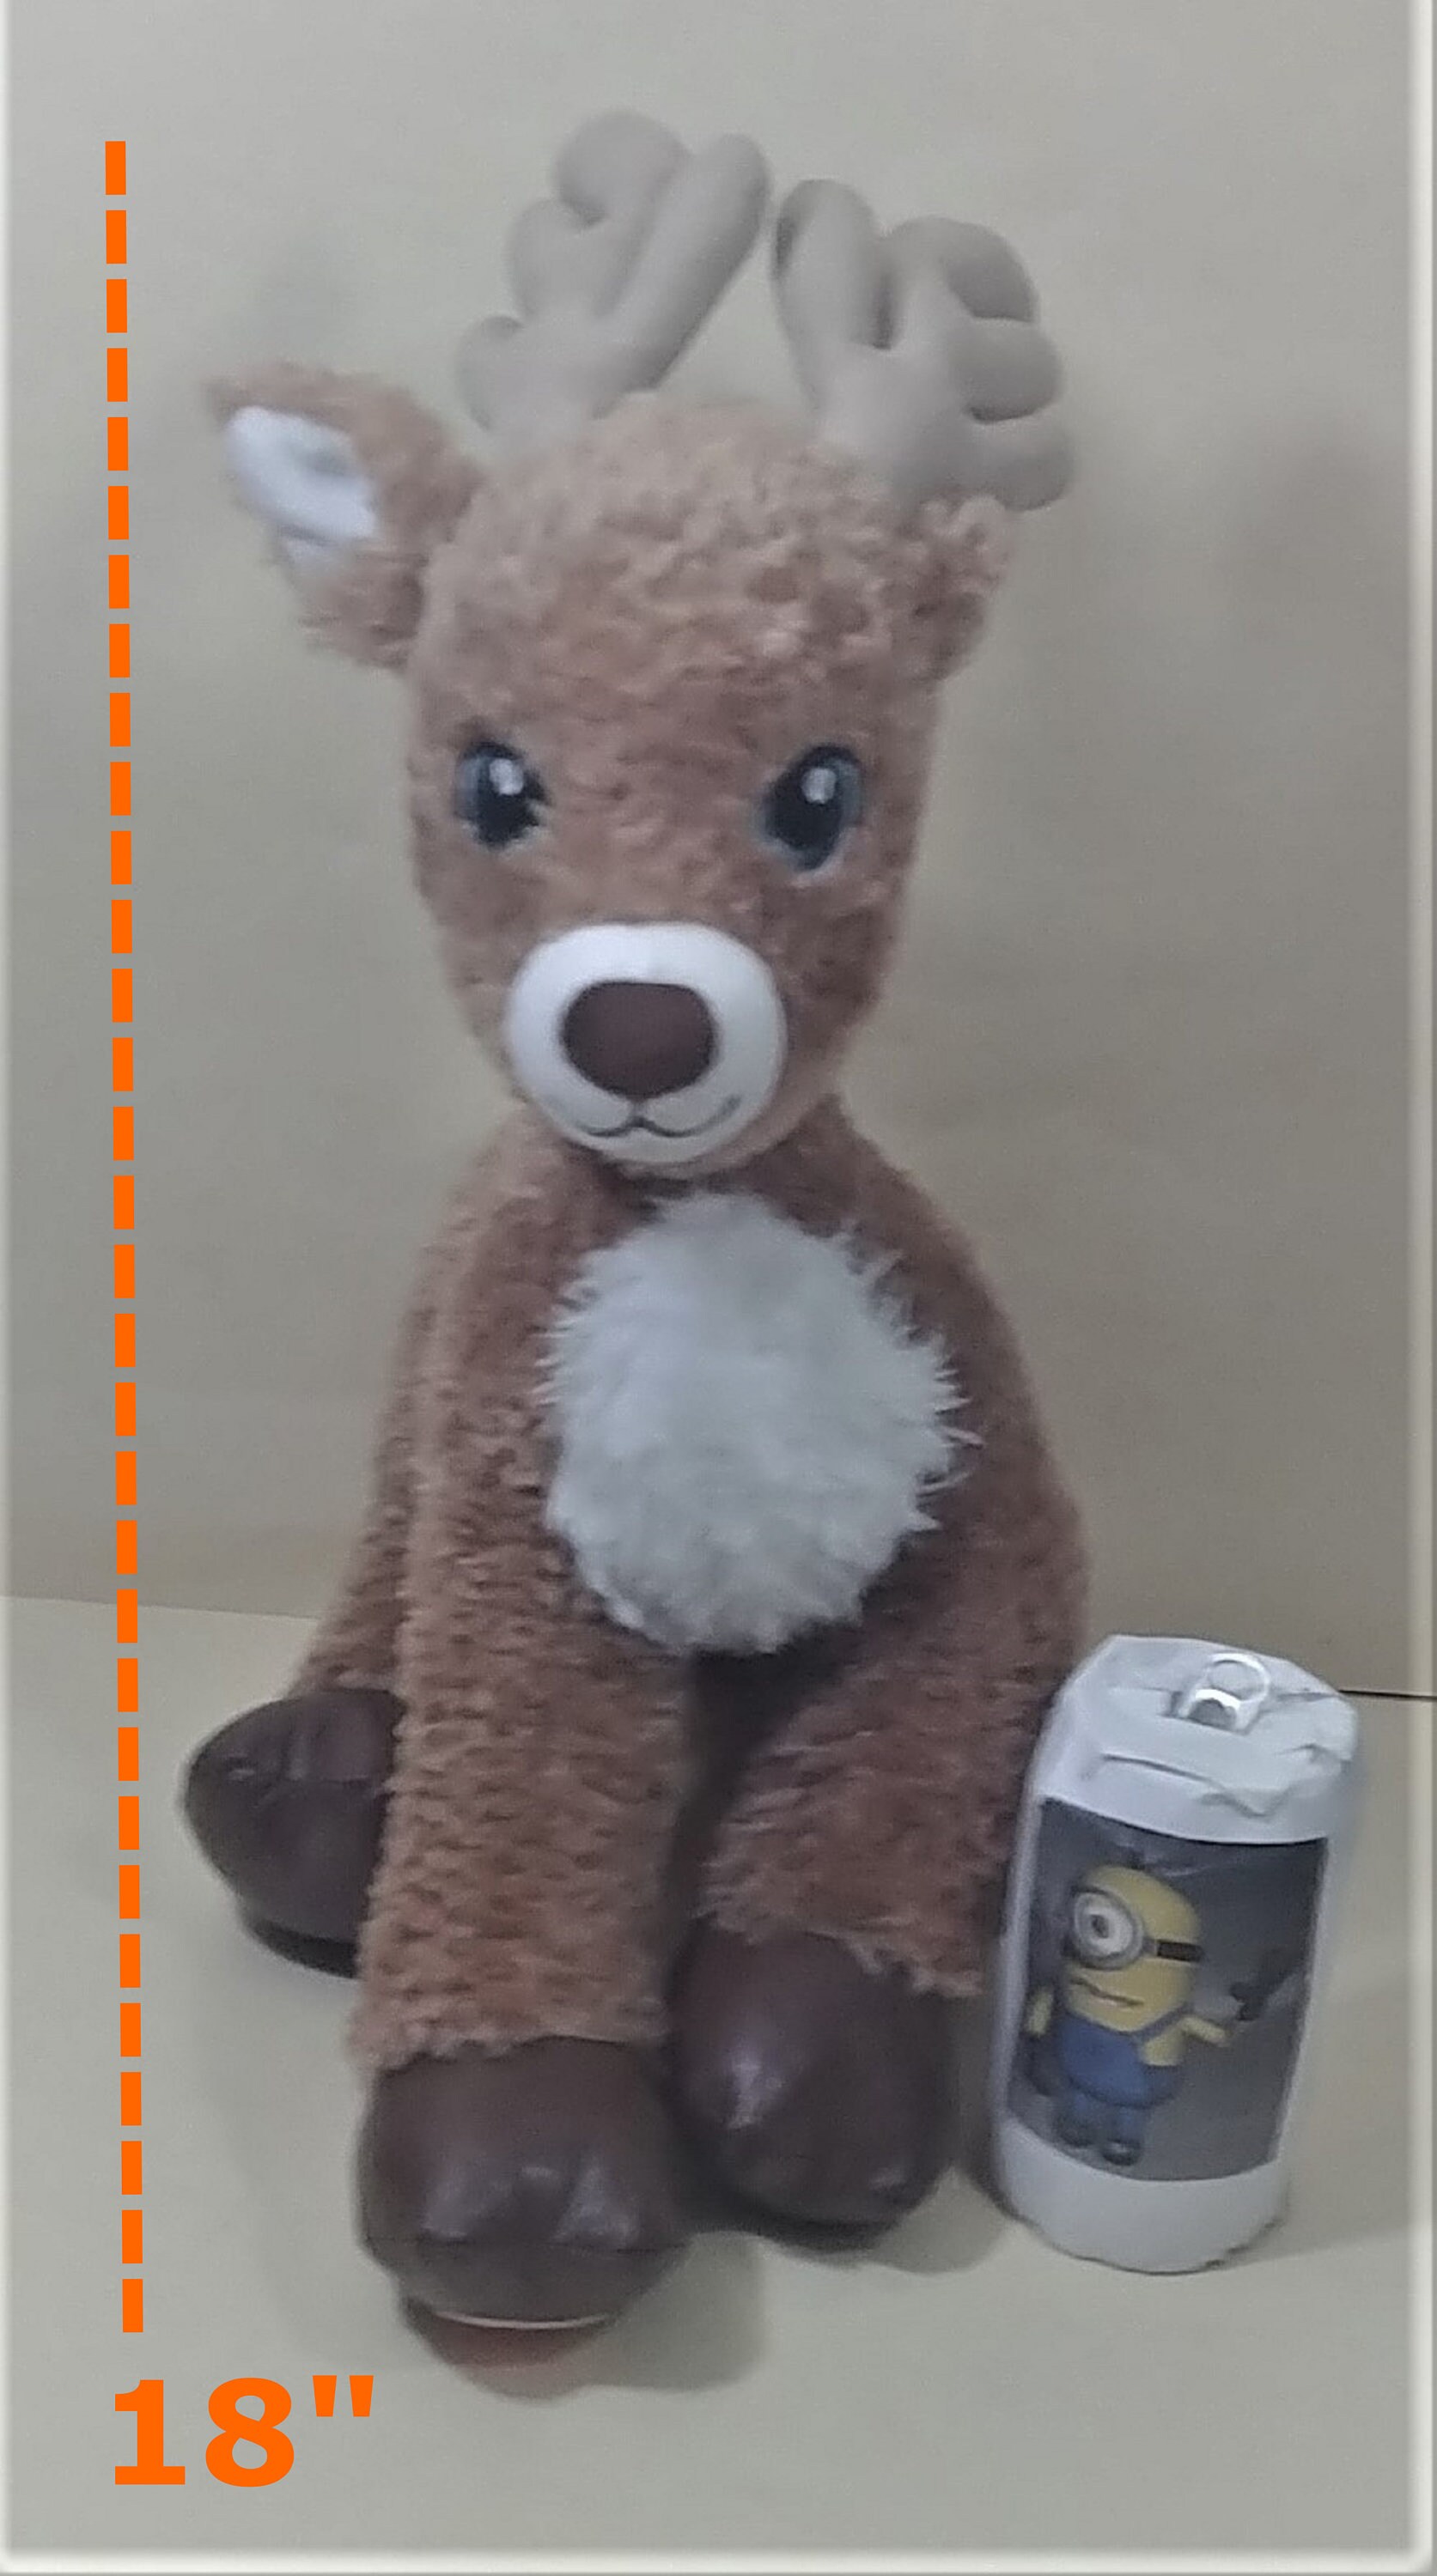 Build Make a Teddy Bear Kit Brown Reindeer 16 Inch/40cm No Sew 